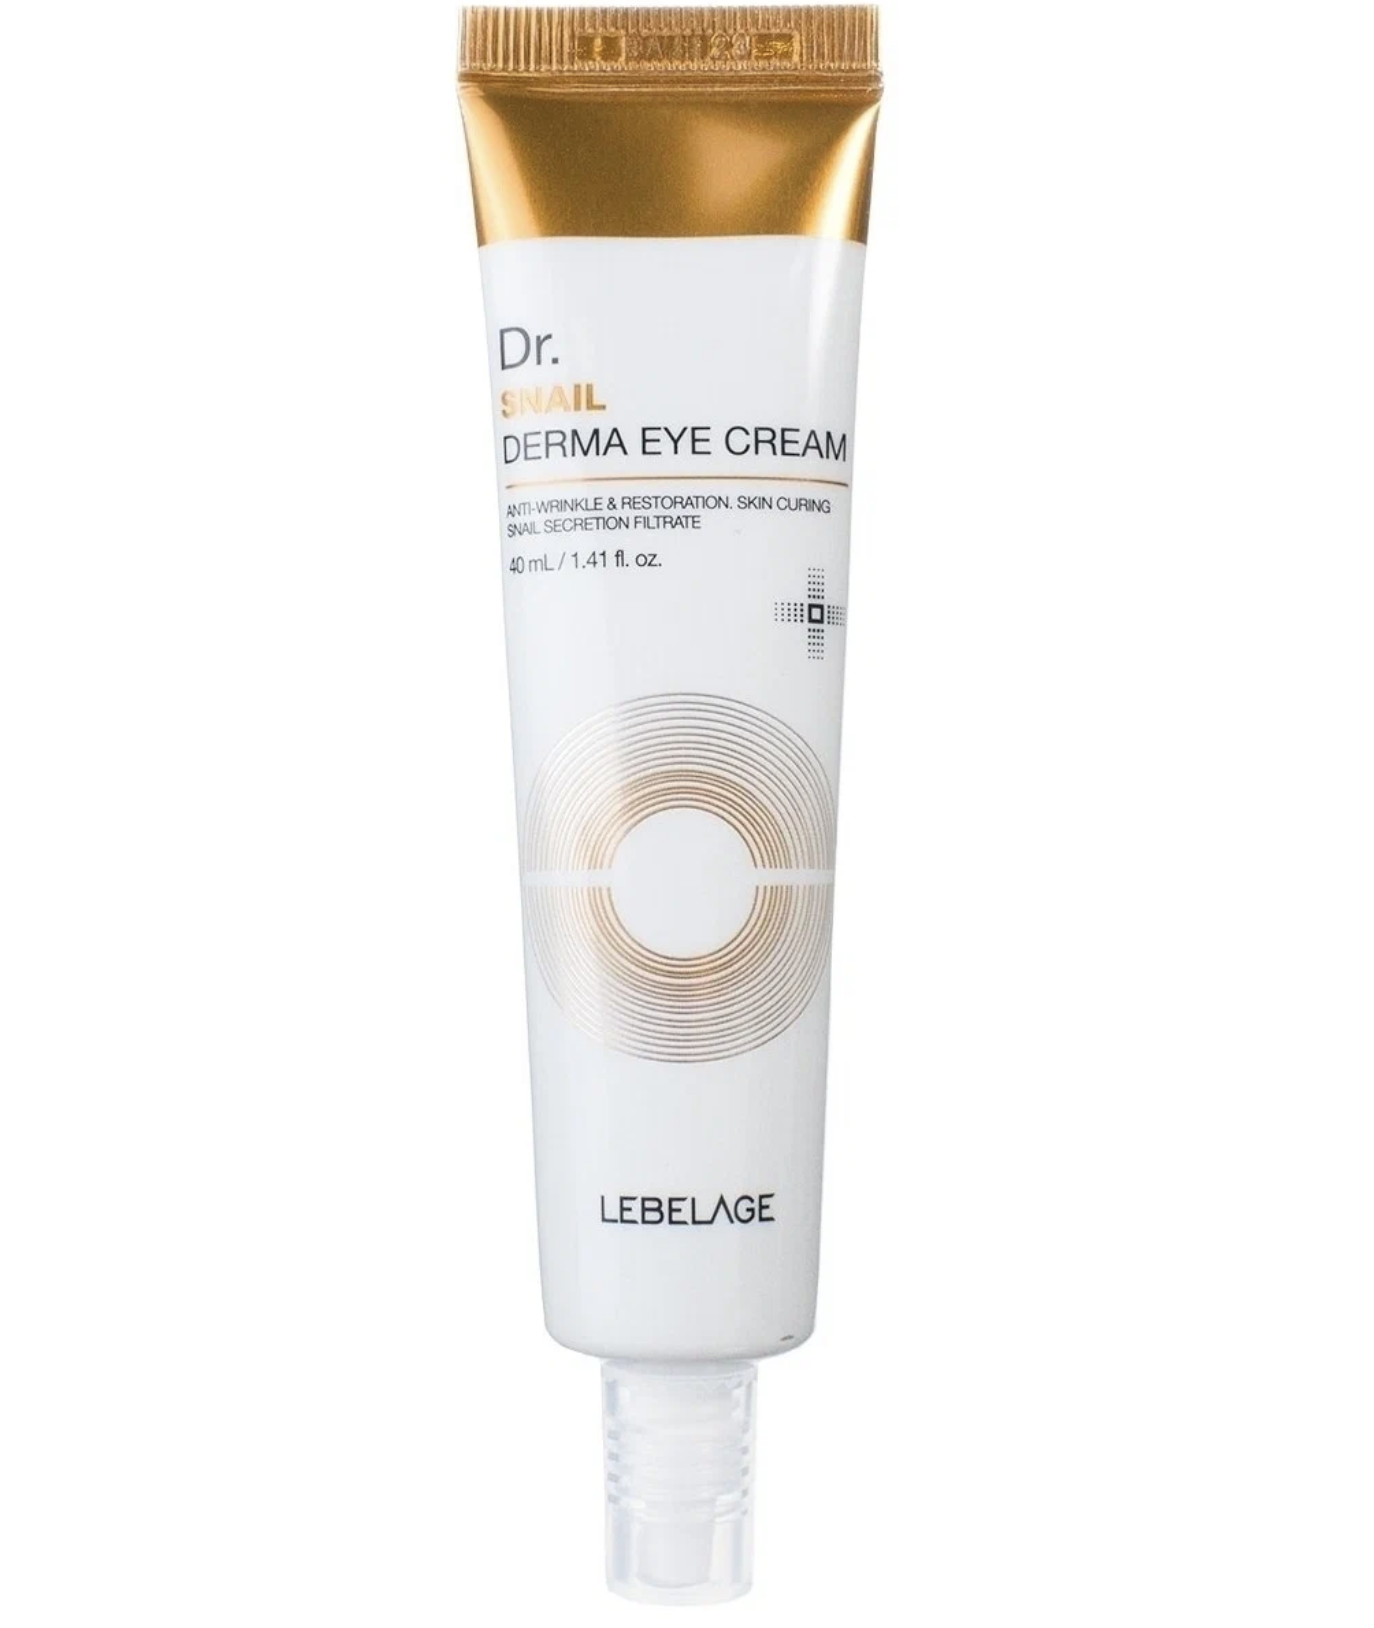   / Lebelage -        Dr. Snail Derma Eye Cream 40 